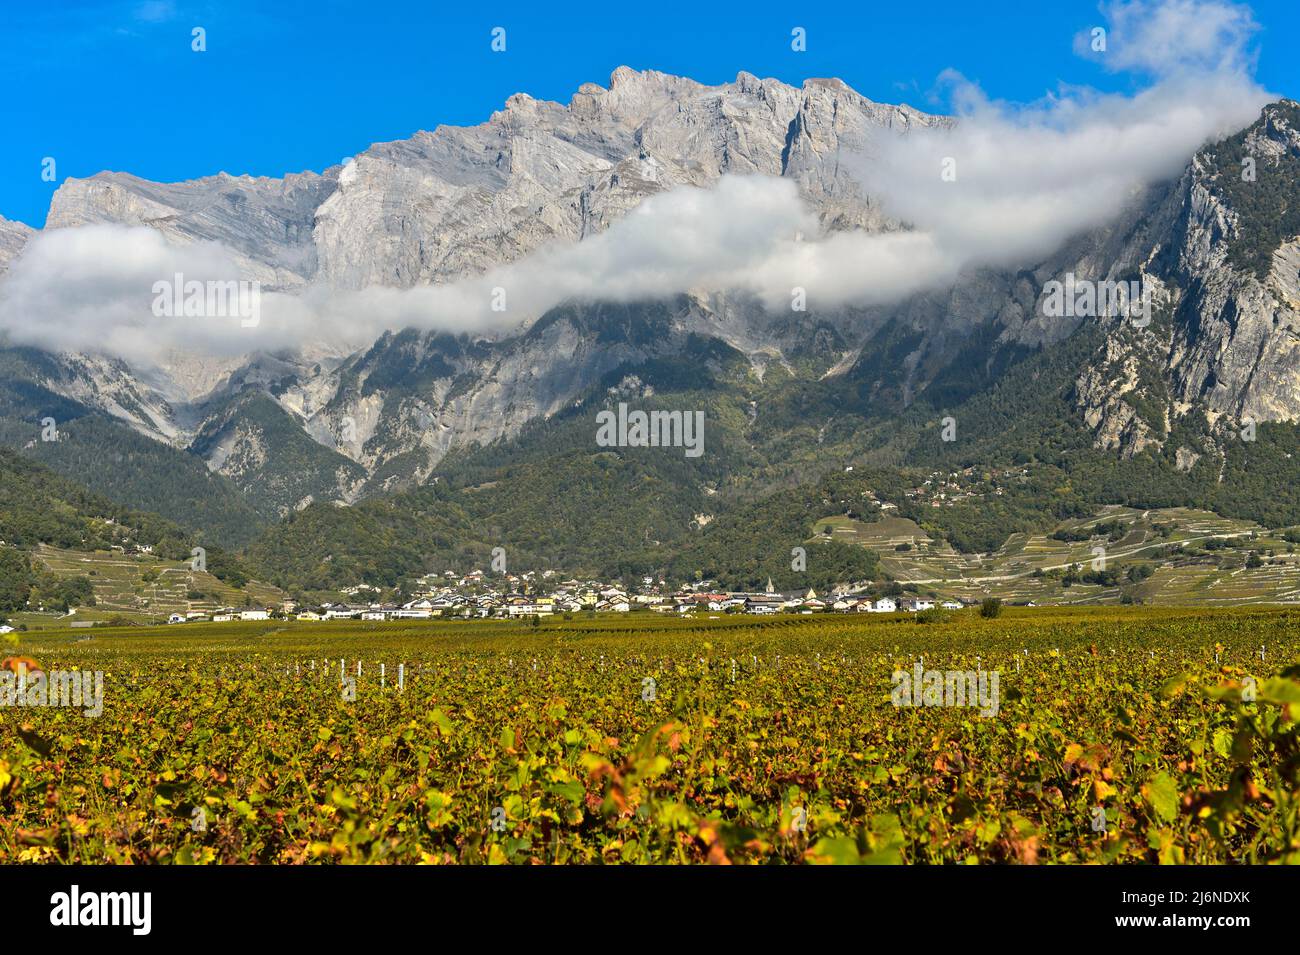 Chamoson wine region in front of the cliffs of the Haut de Cry summit, Chamoson, Valais, Switzerland Stock Photo